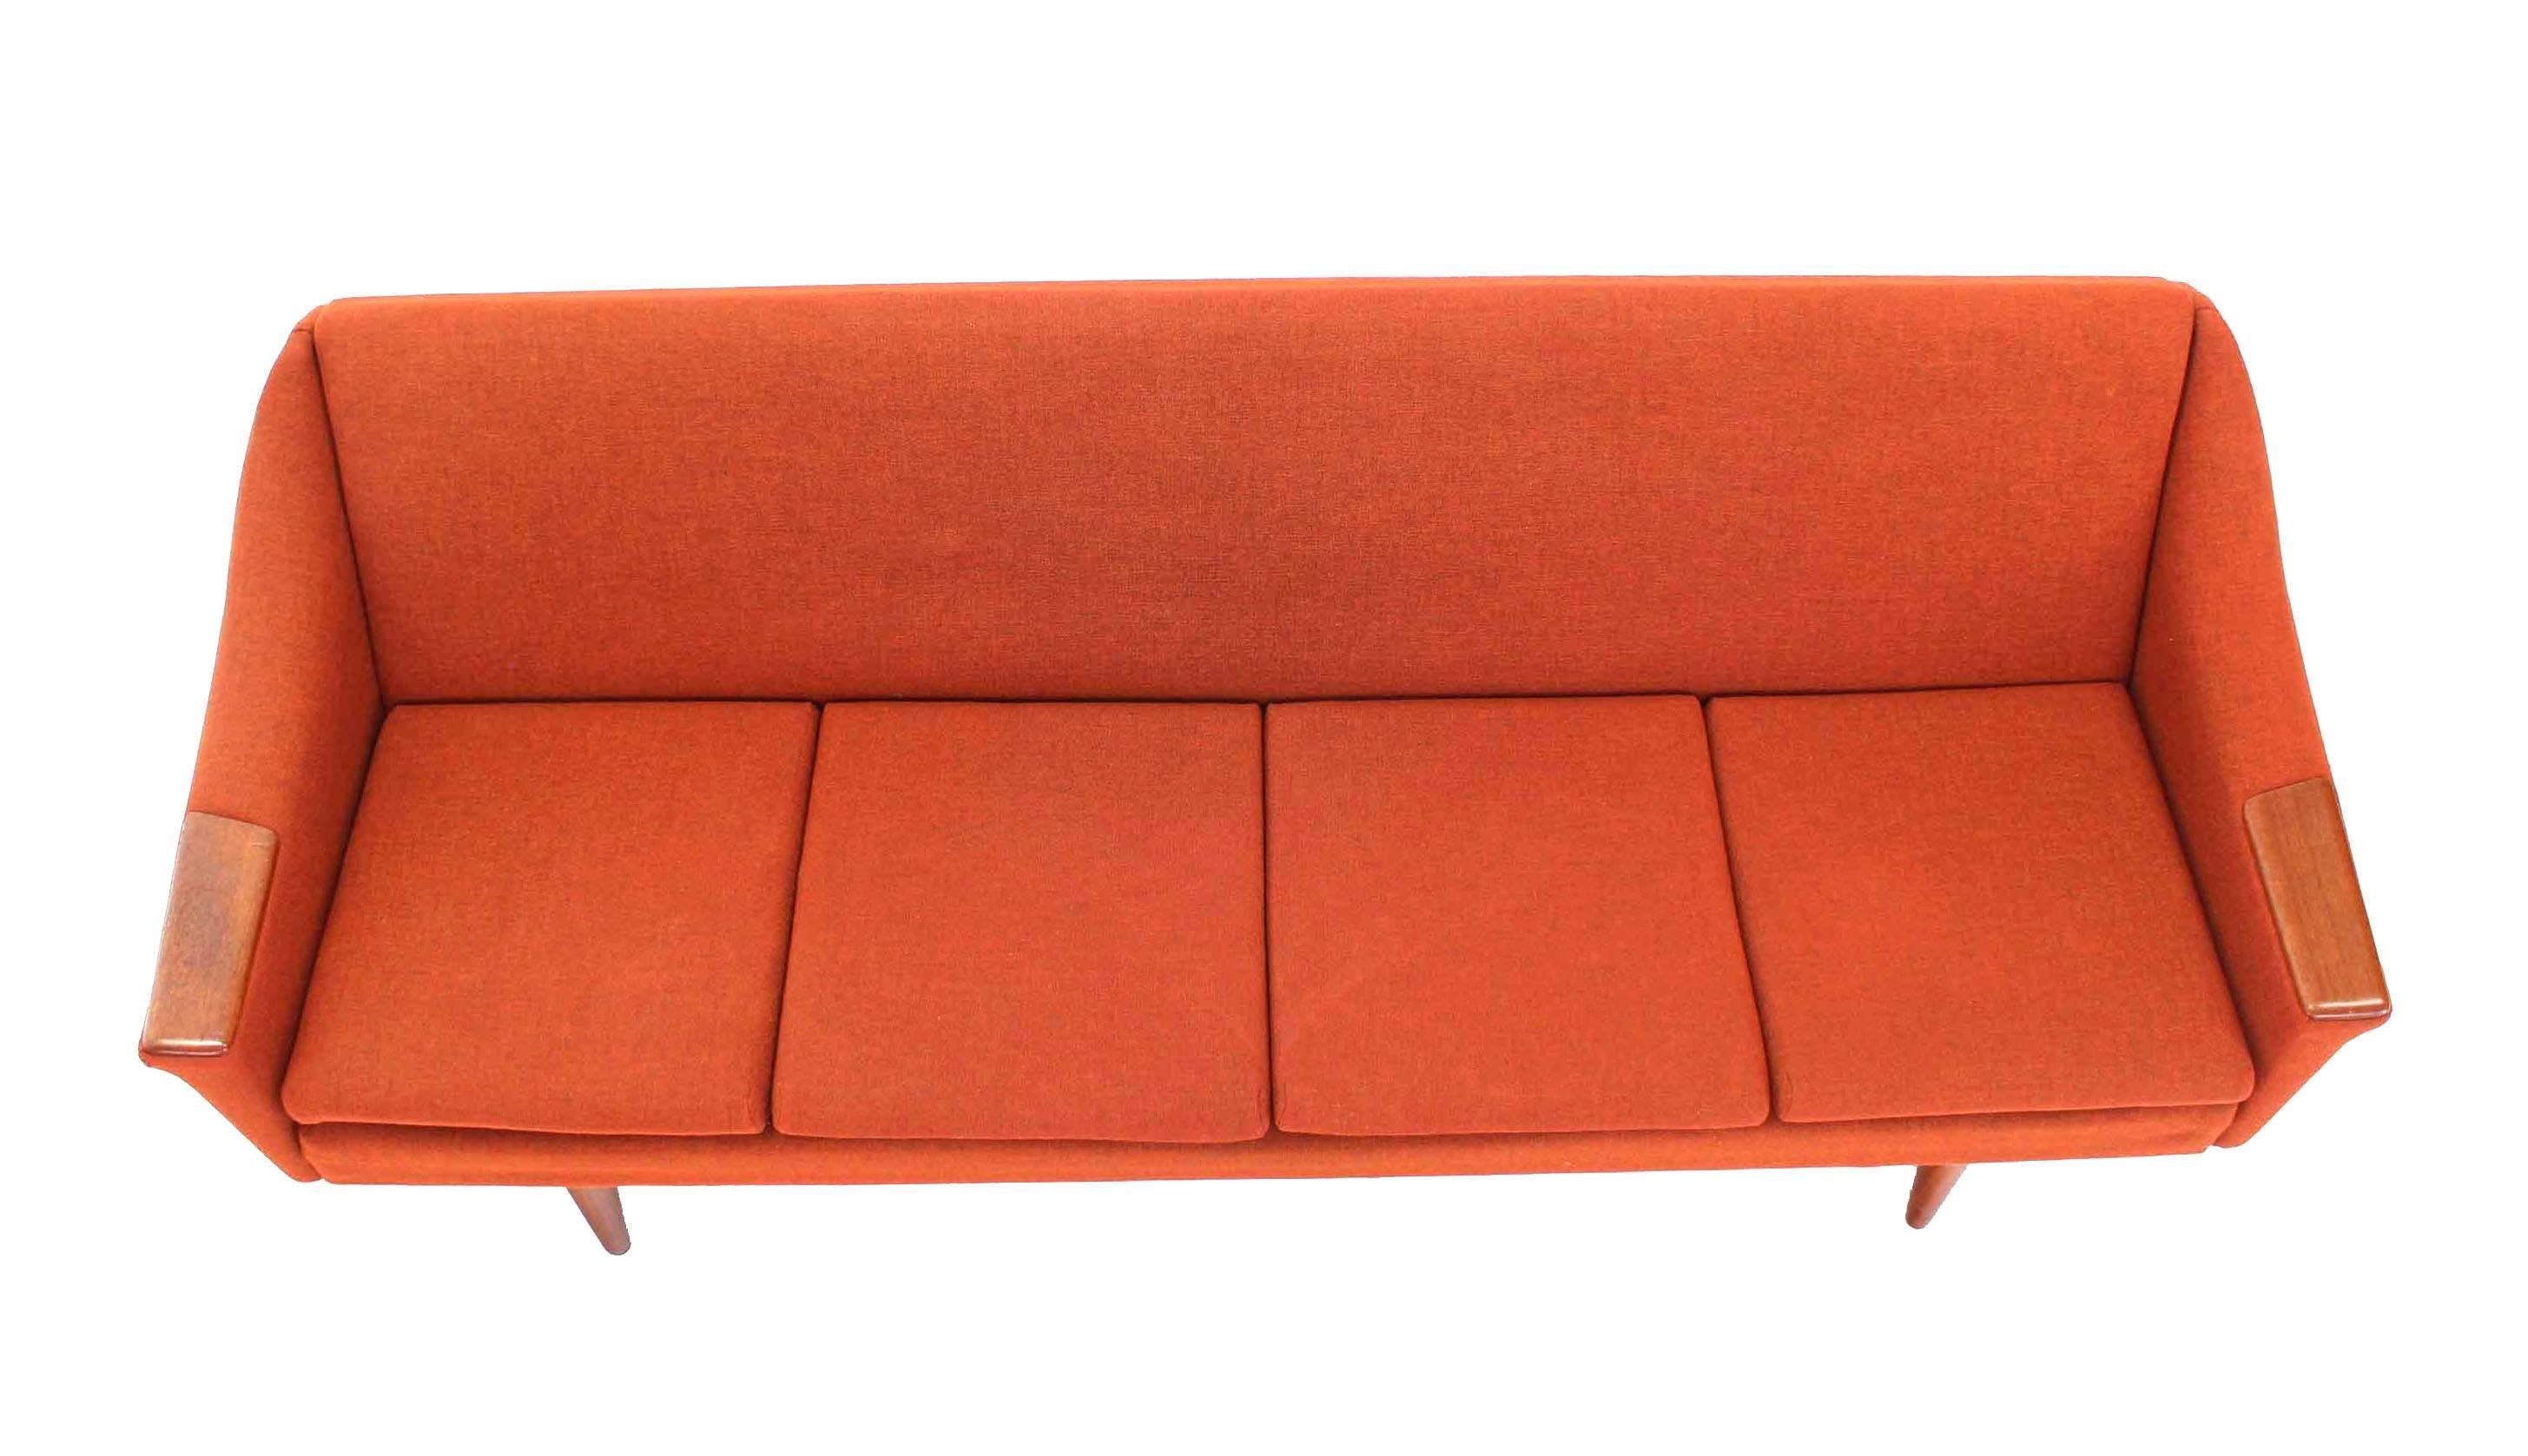 American Rare Danish Modern Convertible Brick Wool Upholstery Daybed Sofa